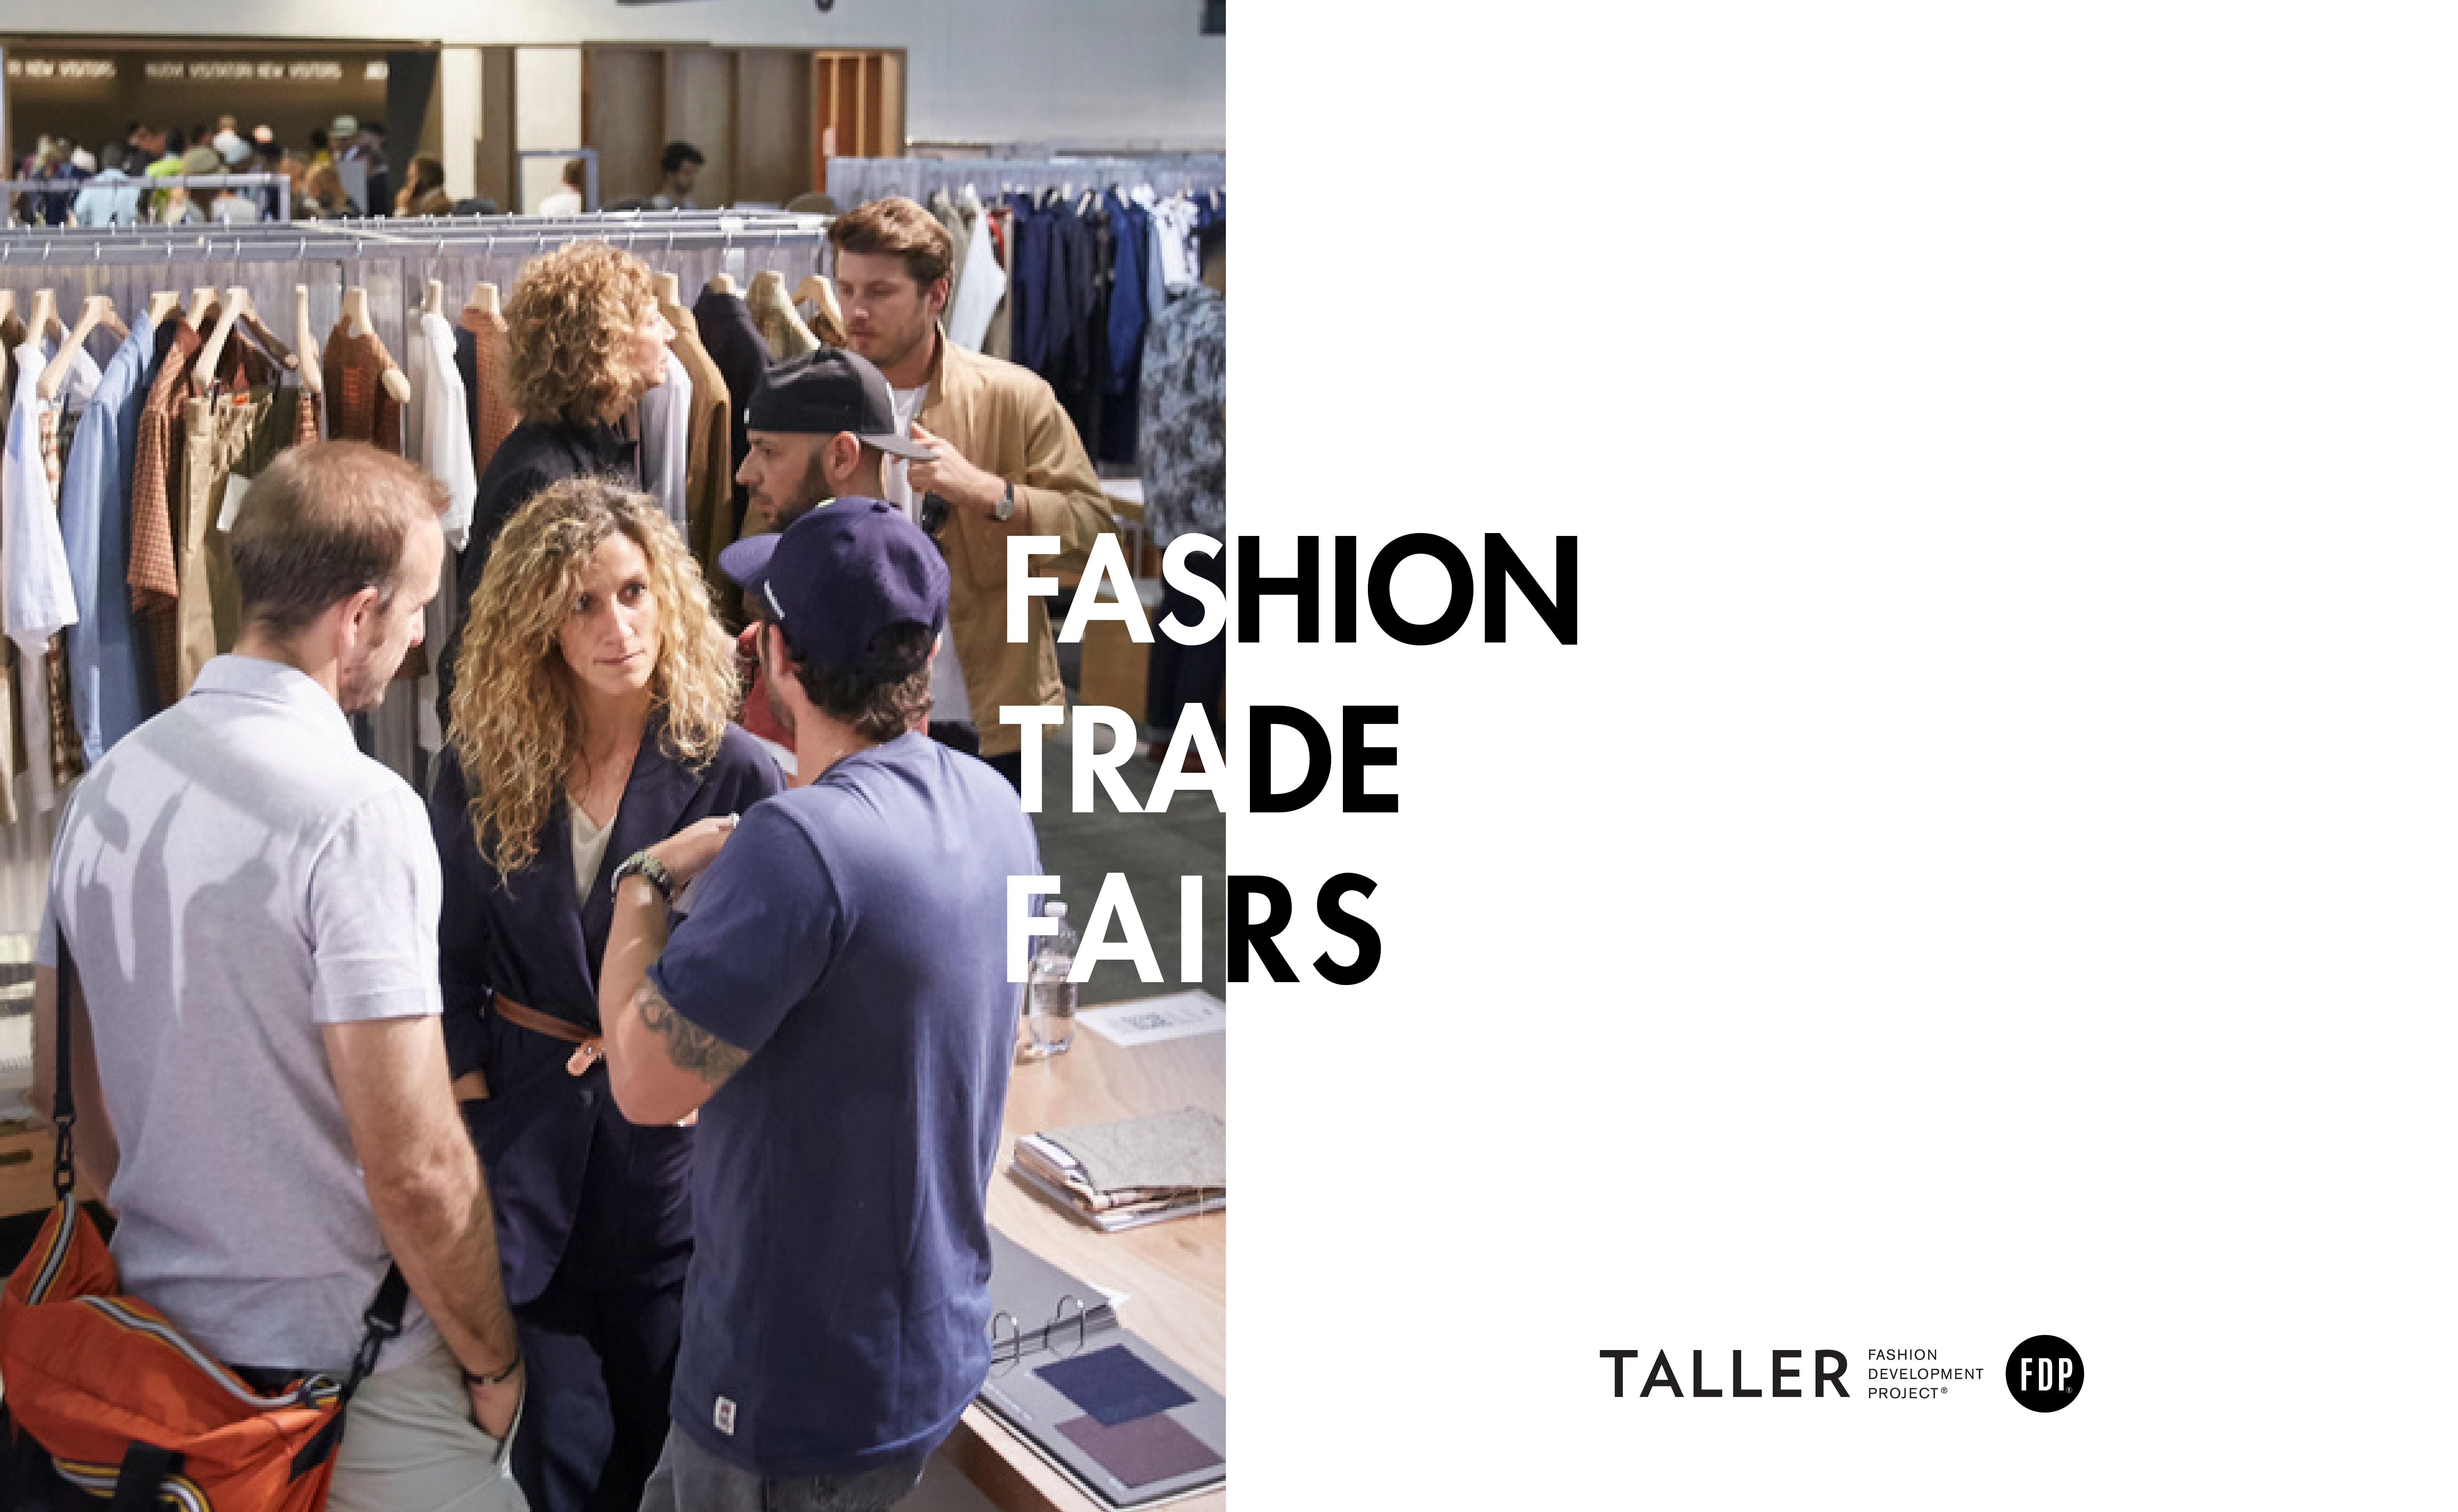 Fashion trade fairs y su propósito.